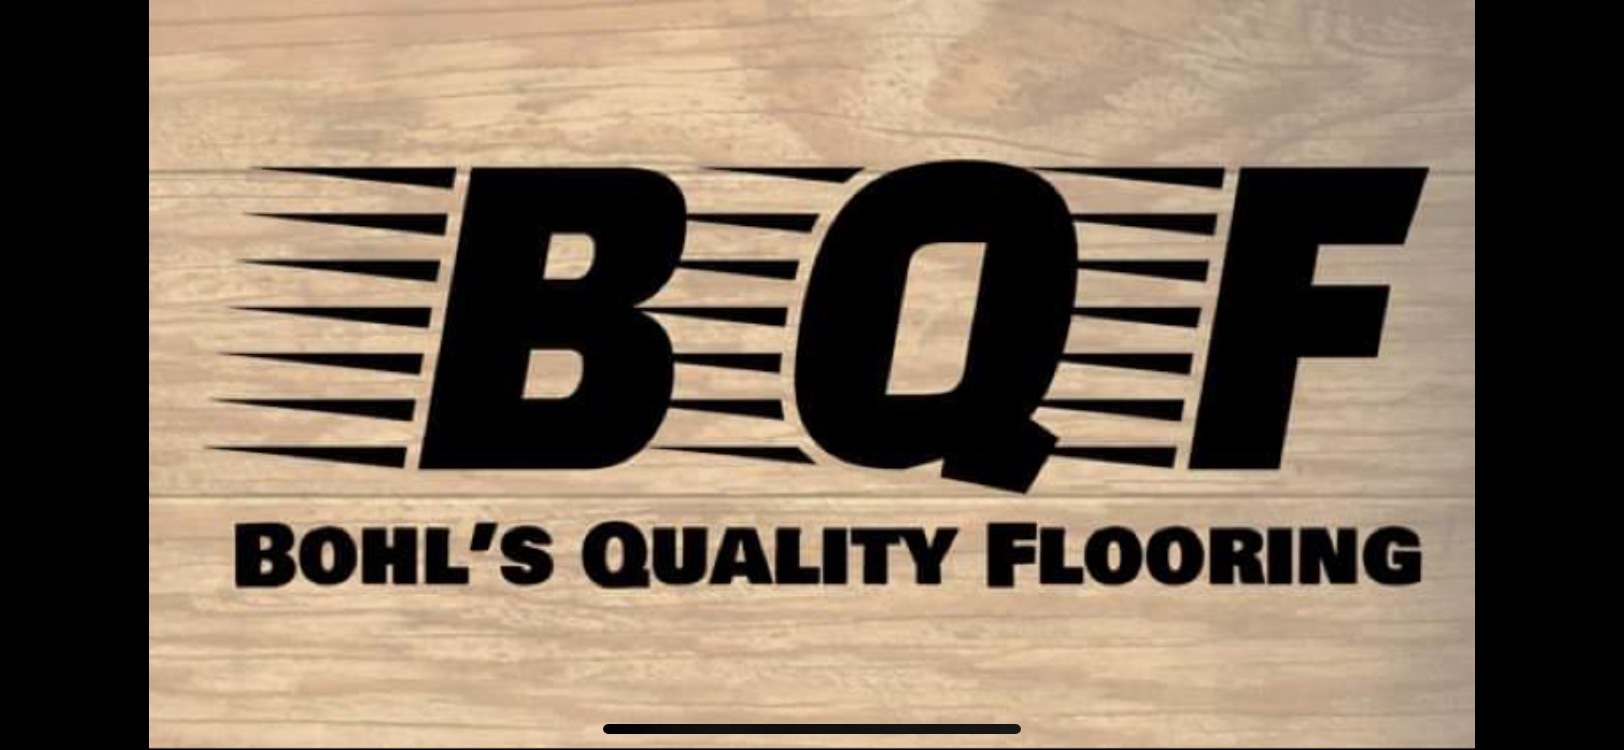 Bohl's Quality Flooring